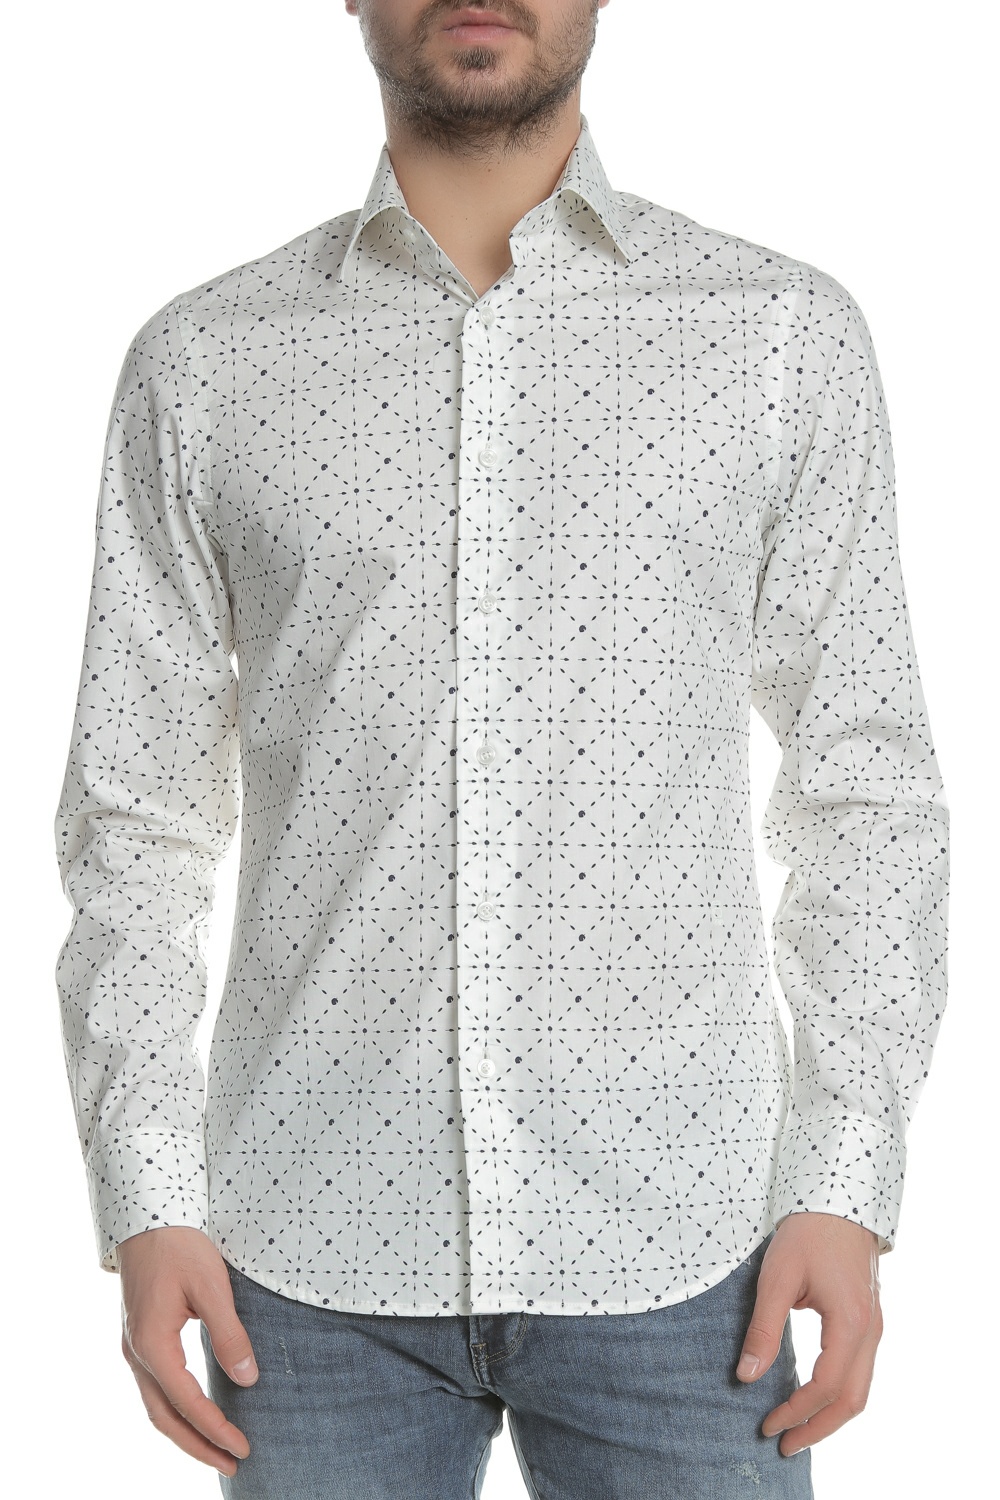 G-STAR - Ανδρικό μακρυμάνικο πουκάμισο G-STAR RAW CORE SHIRT λευκό Ανδρικά/Ρούχα/Πουκάμισα/Μακρυμάνικα